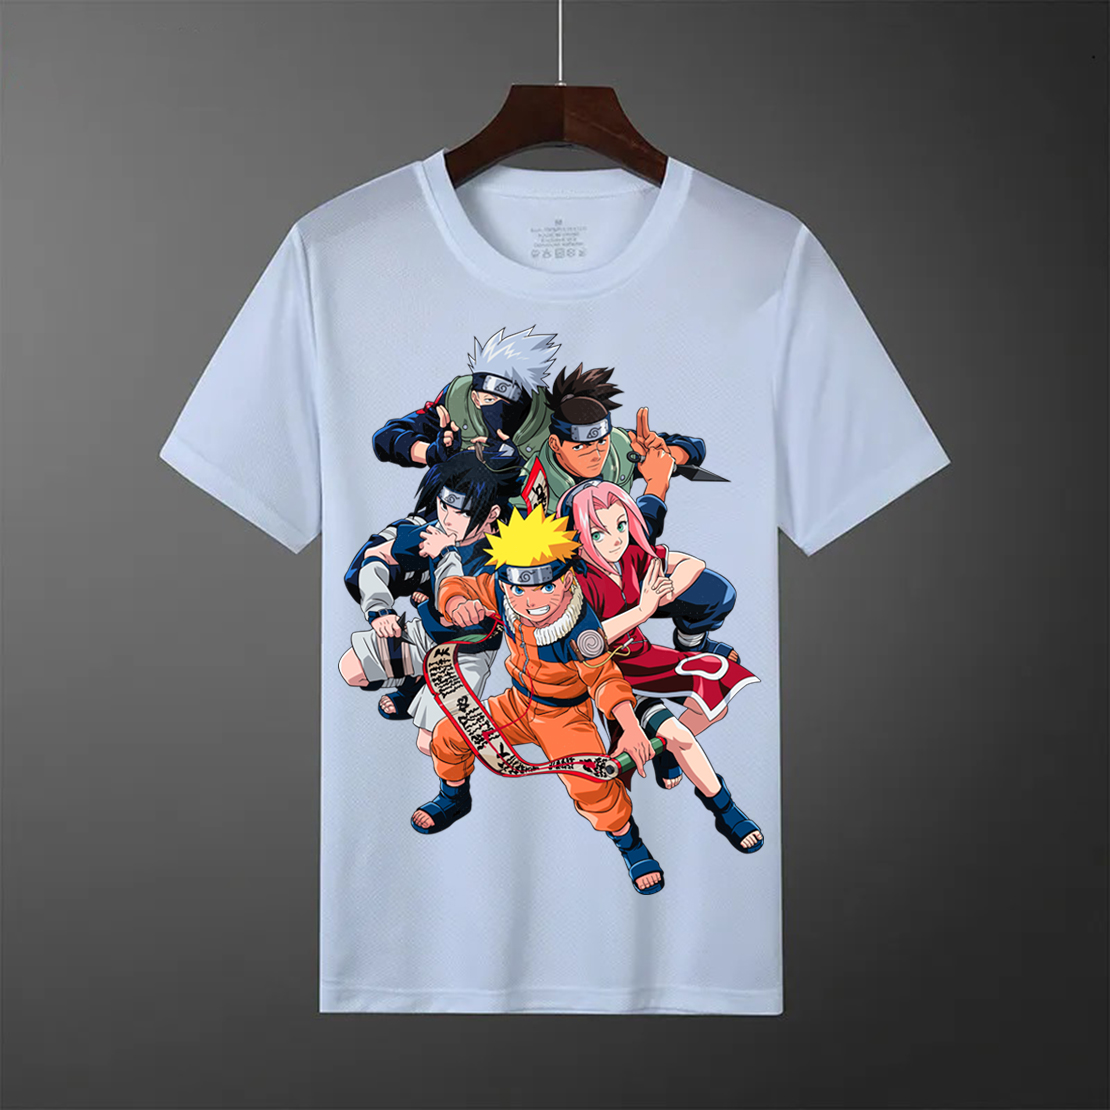 Naruto Shippuden Anime Characters Black T-Shirt Men's MEDIUM